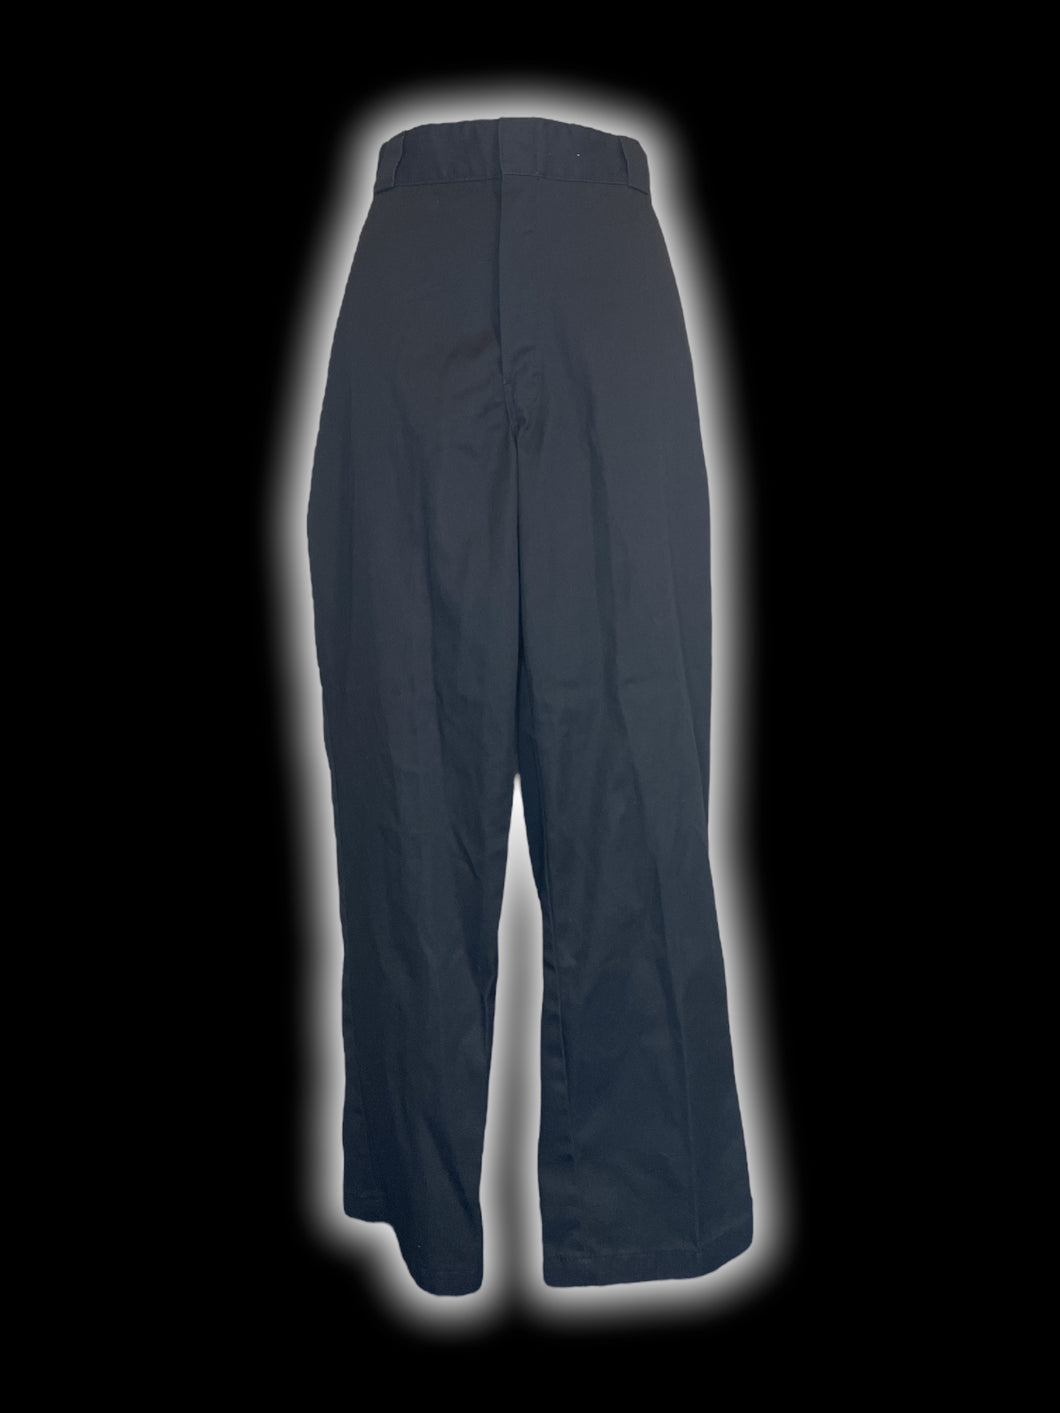 XL Black high waist straight leg pants w/ pockets, belt loops, & clasp/zipper closure